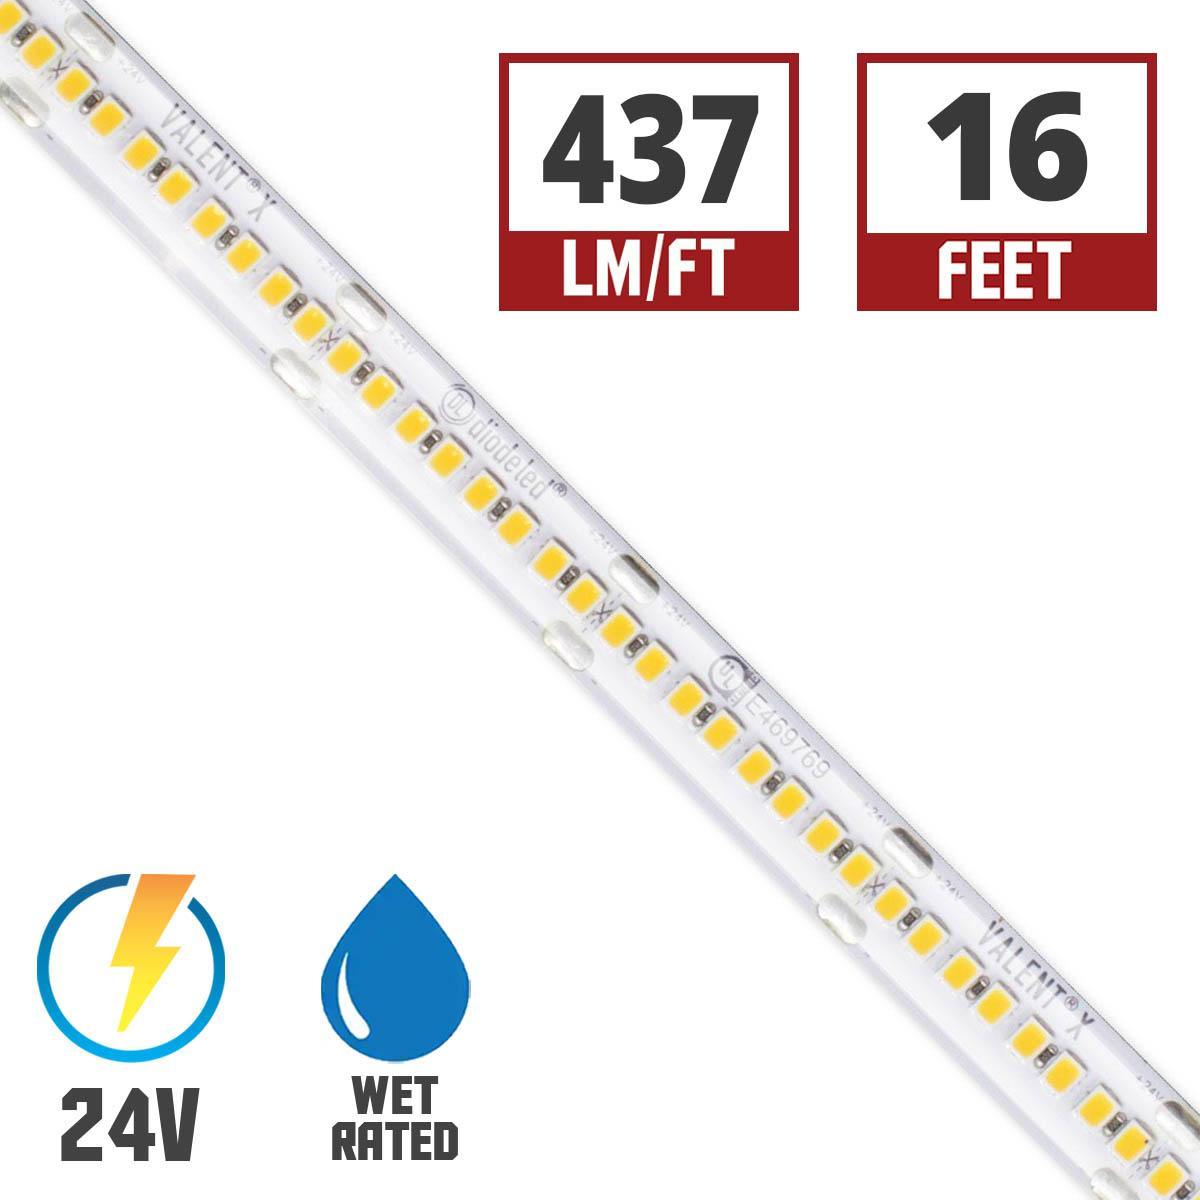 Valent X High Density LED Strip Light, 16ft Reel, 24V, IP65 Wet locations